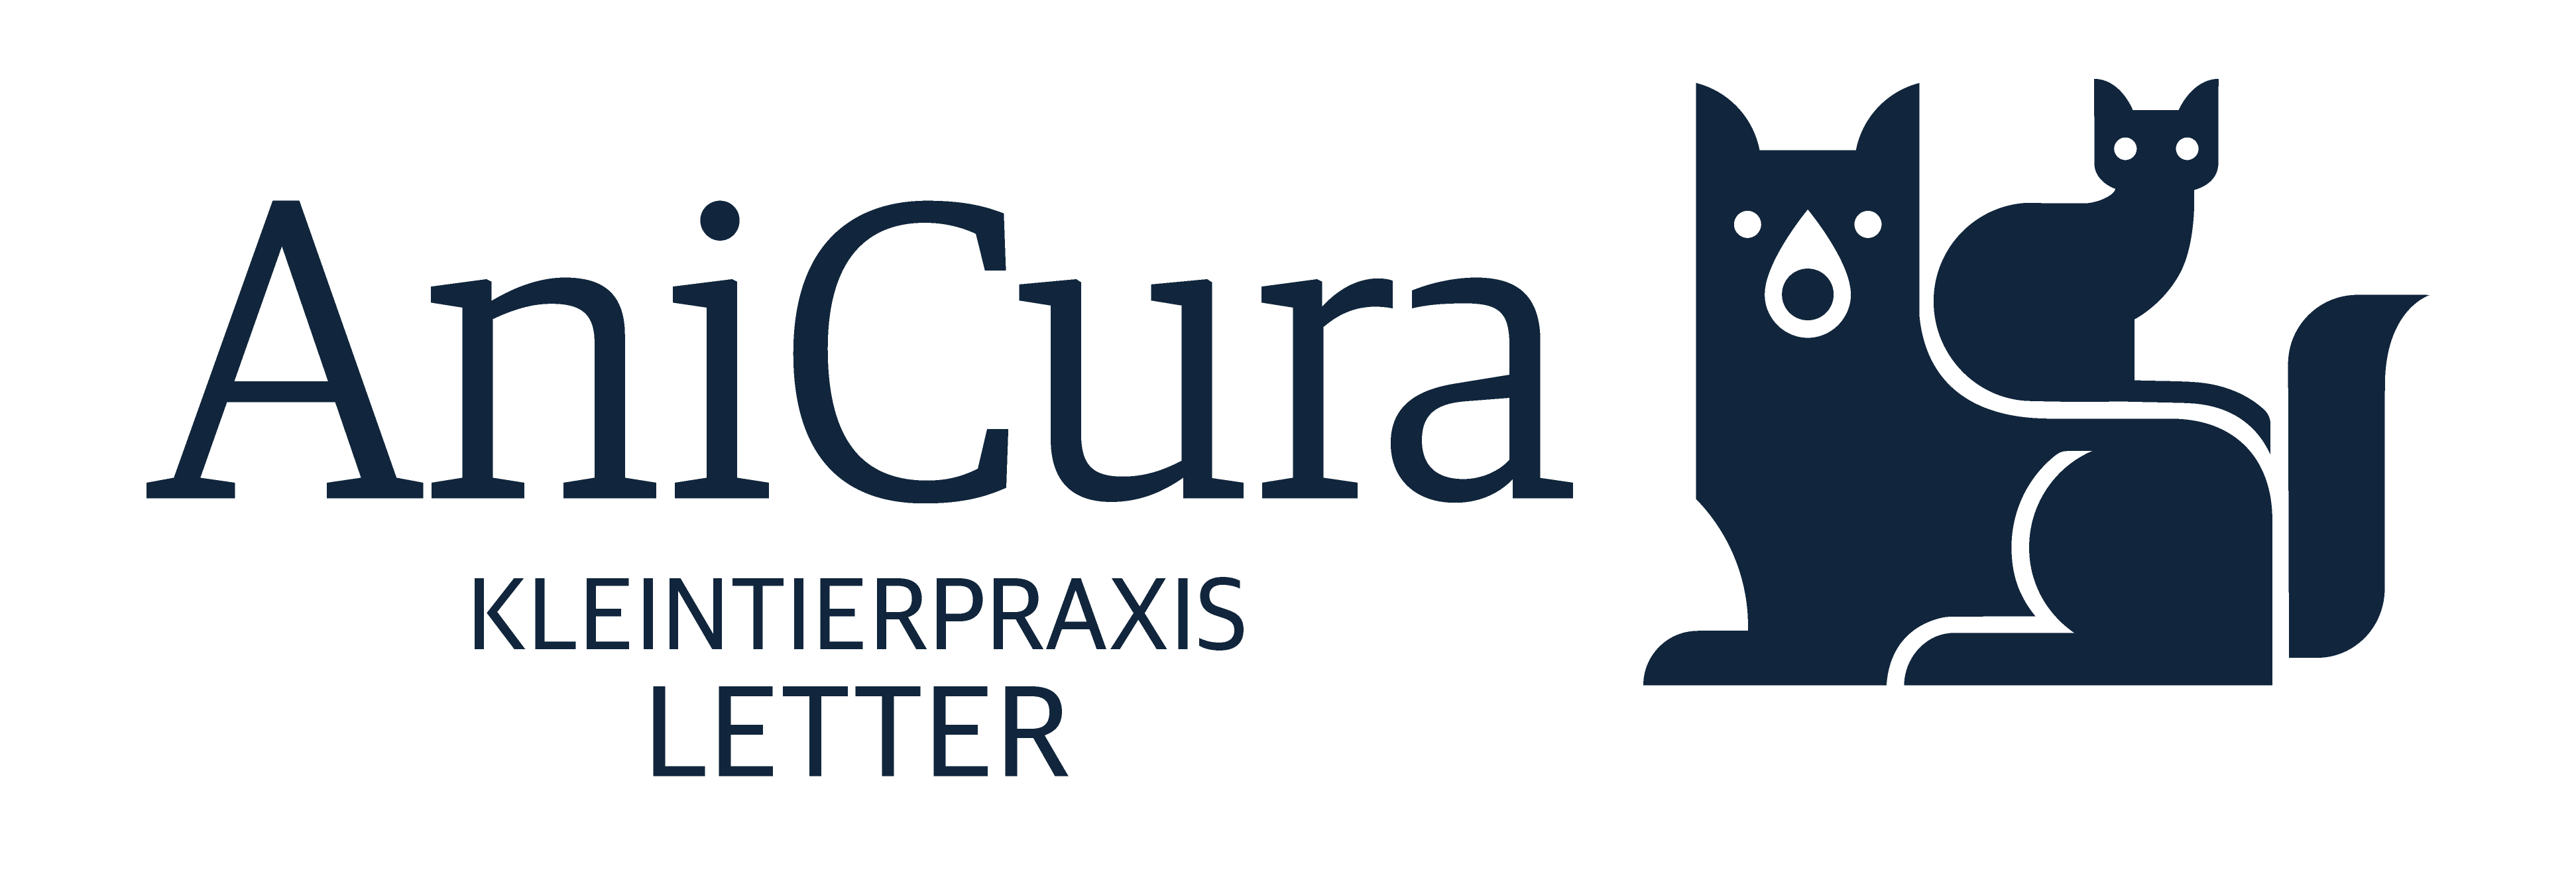 AniCura Kleintierpraxis Letter logo